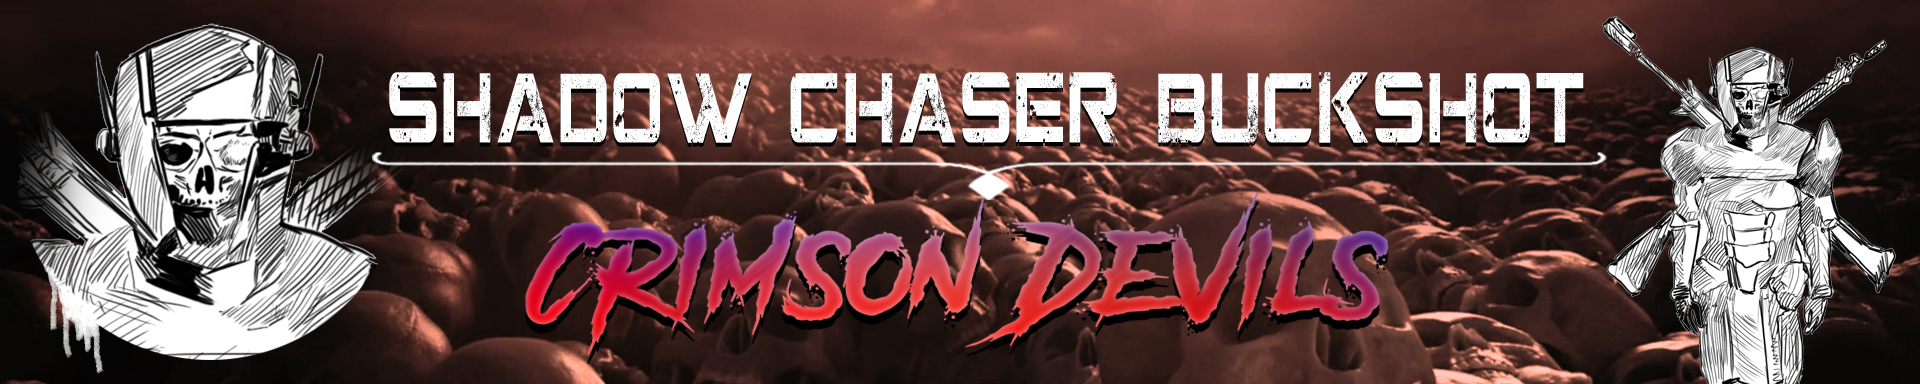 Shadow Chaser Buckshot.jpg